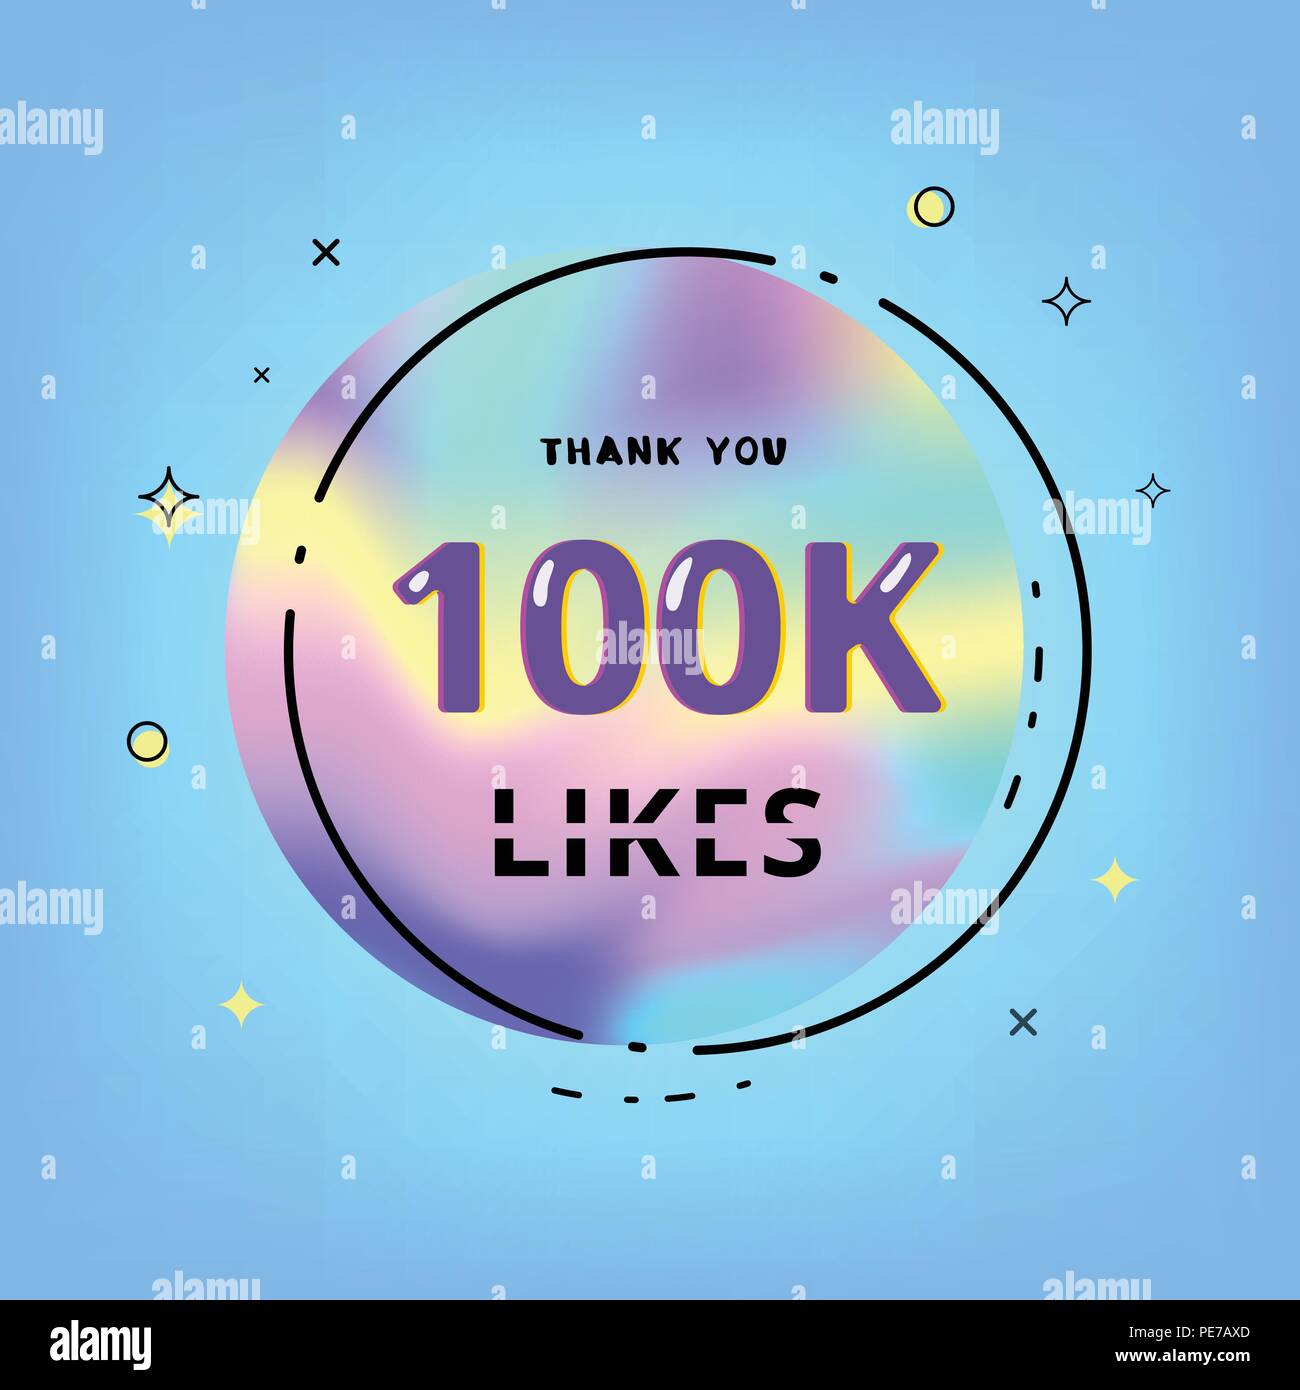 100k likes thank you card. Template for social media. Vector